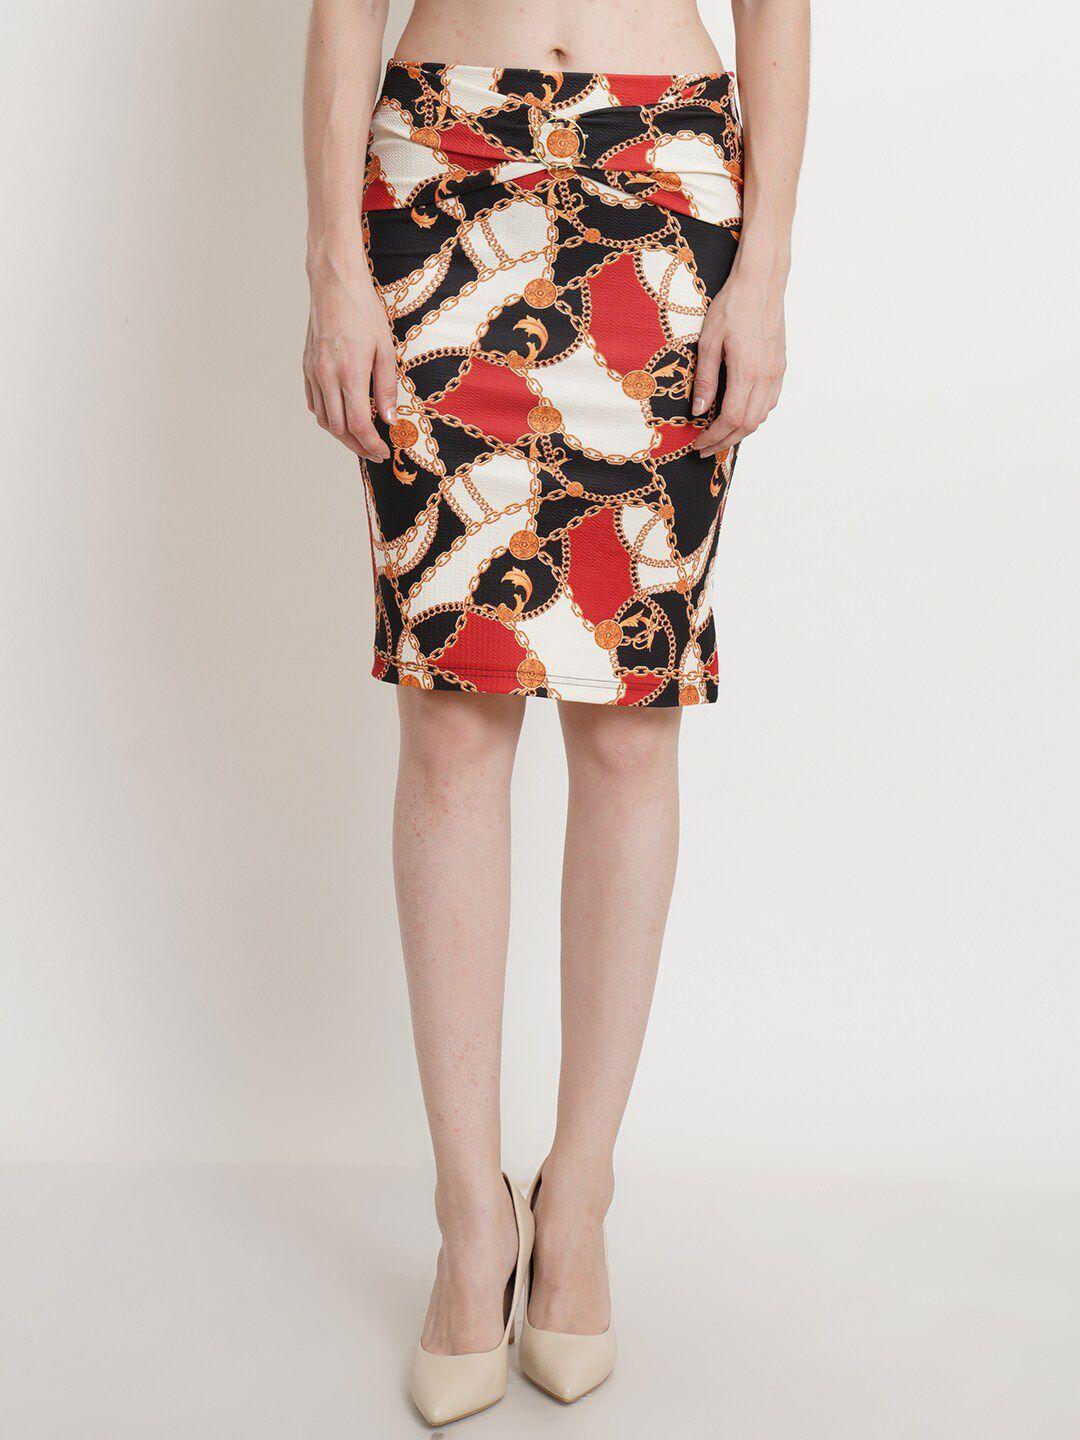 popwings-women-red-&-black-chain-printed-pencil-skirt